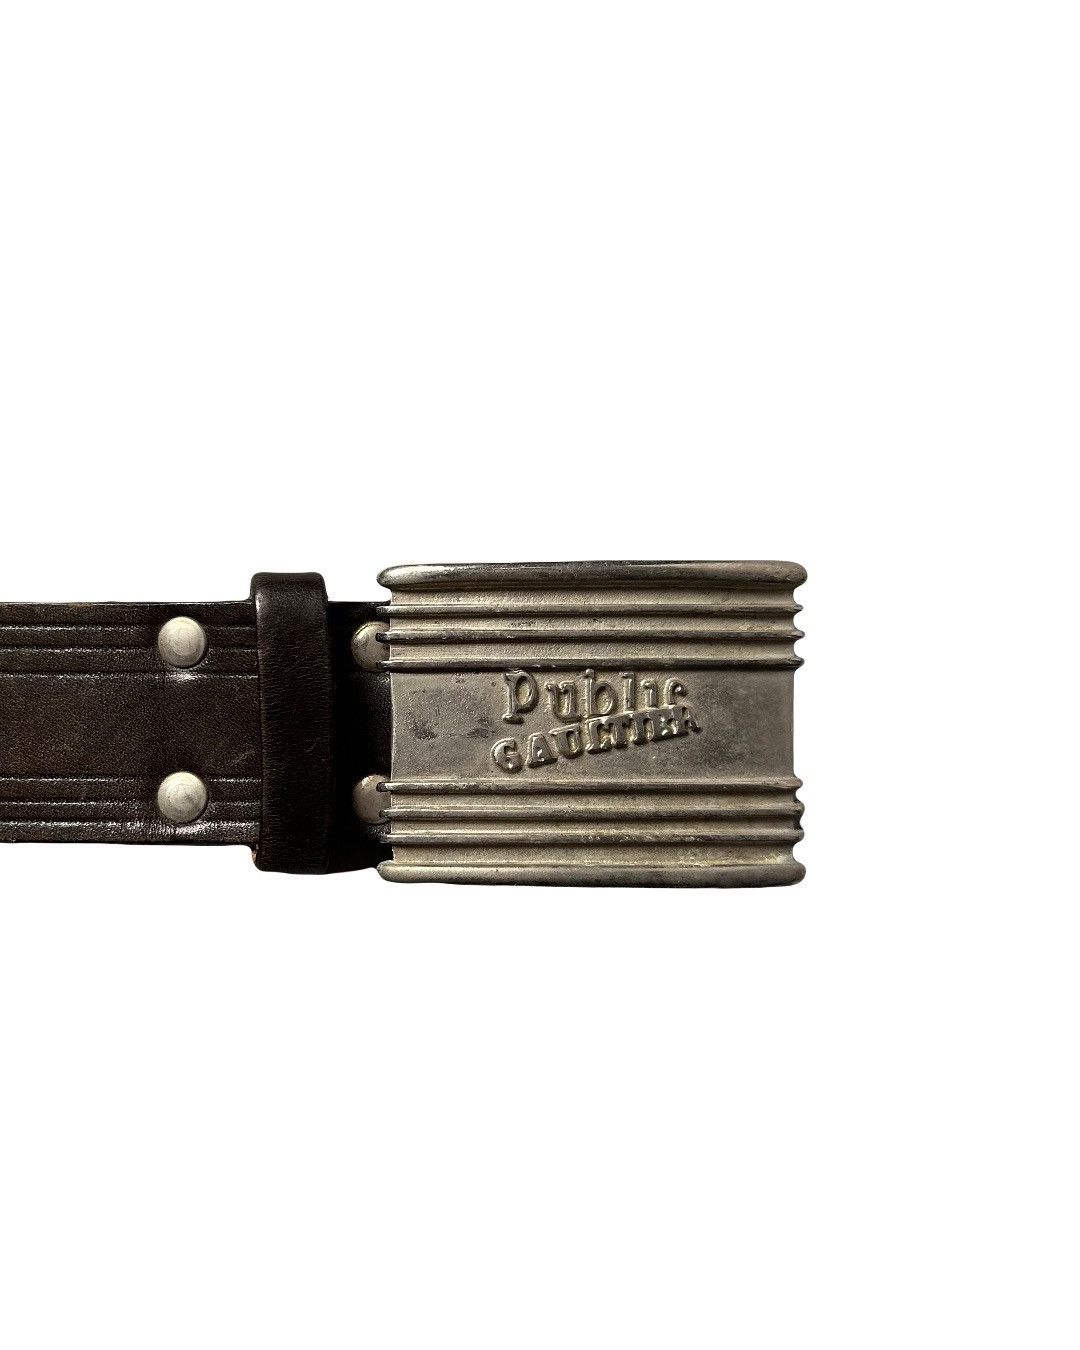 Archival Clothing Jean Paul Gaultier Archive «Public Gaultier» Leather Belt  | Grailed